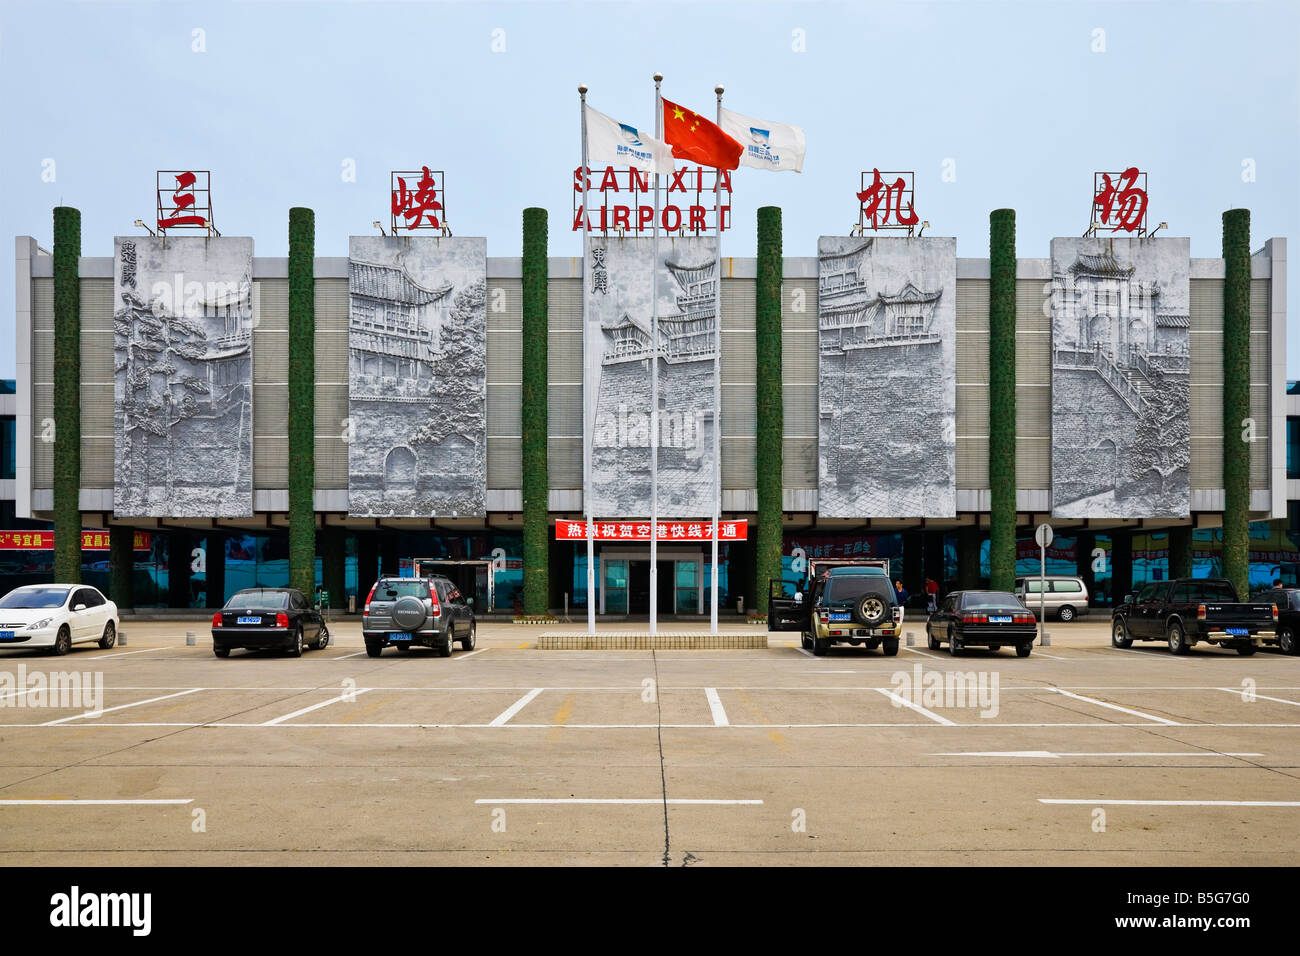 Entrance to San Xia or Sanxia Airport Yichang Hubei Province China JMH3459 Stock Photo